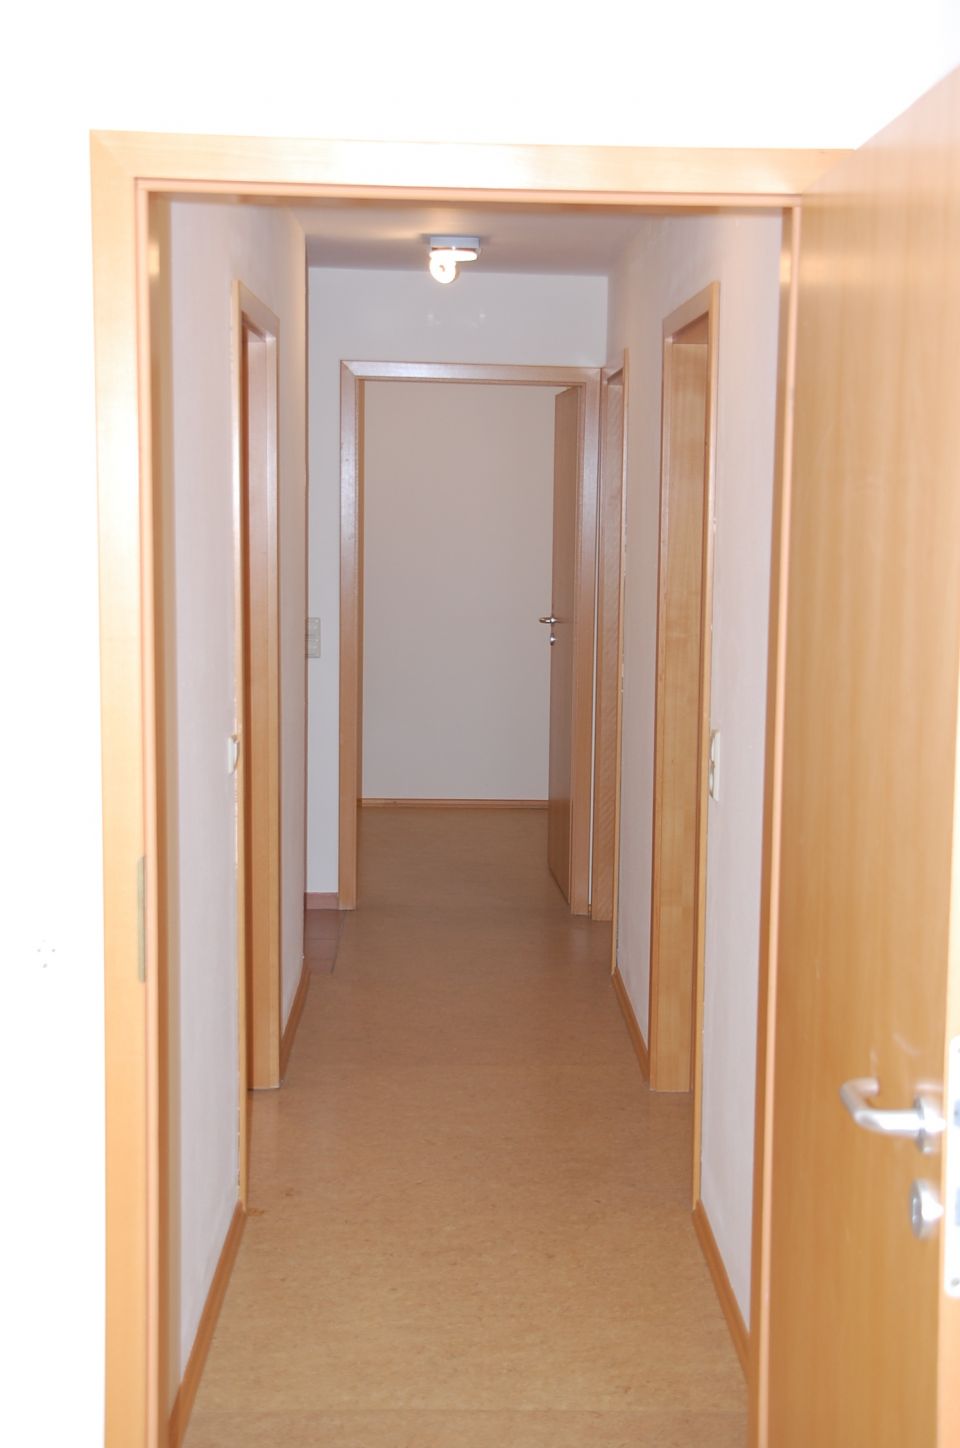 Hallway on the 2nd floor